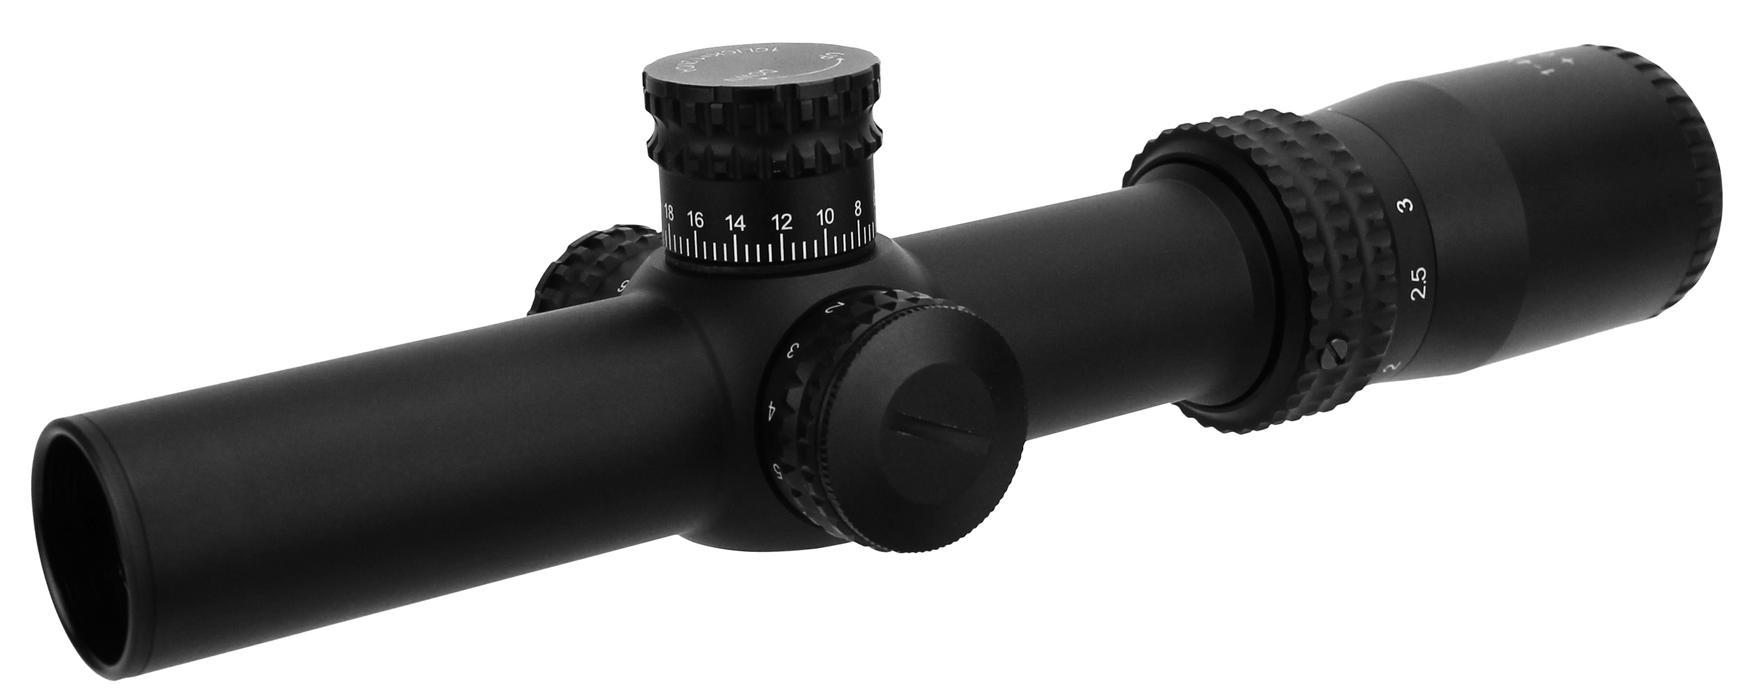 Tacfire Hd Riflescope, Tacfire Sc1424cc-d Hd Rfl Scp 1-4x24 Dot